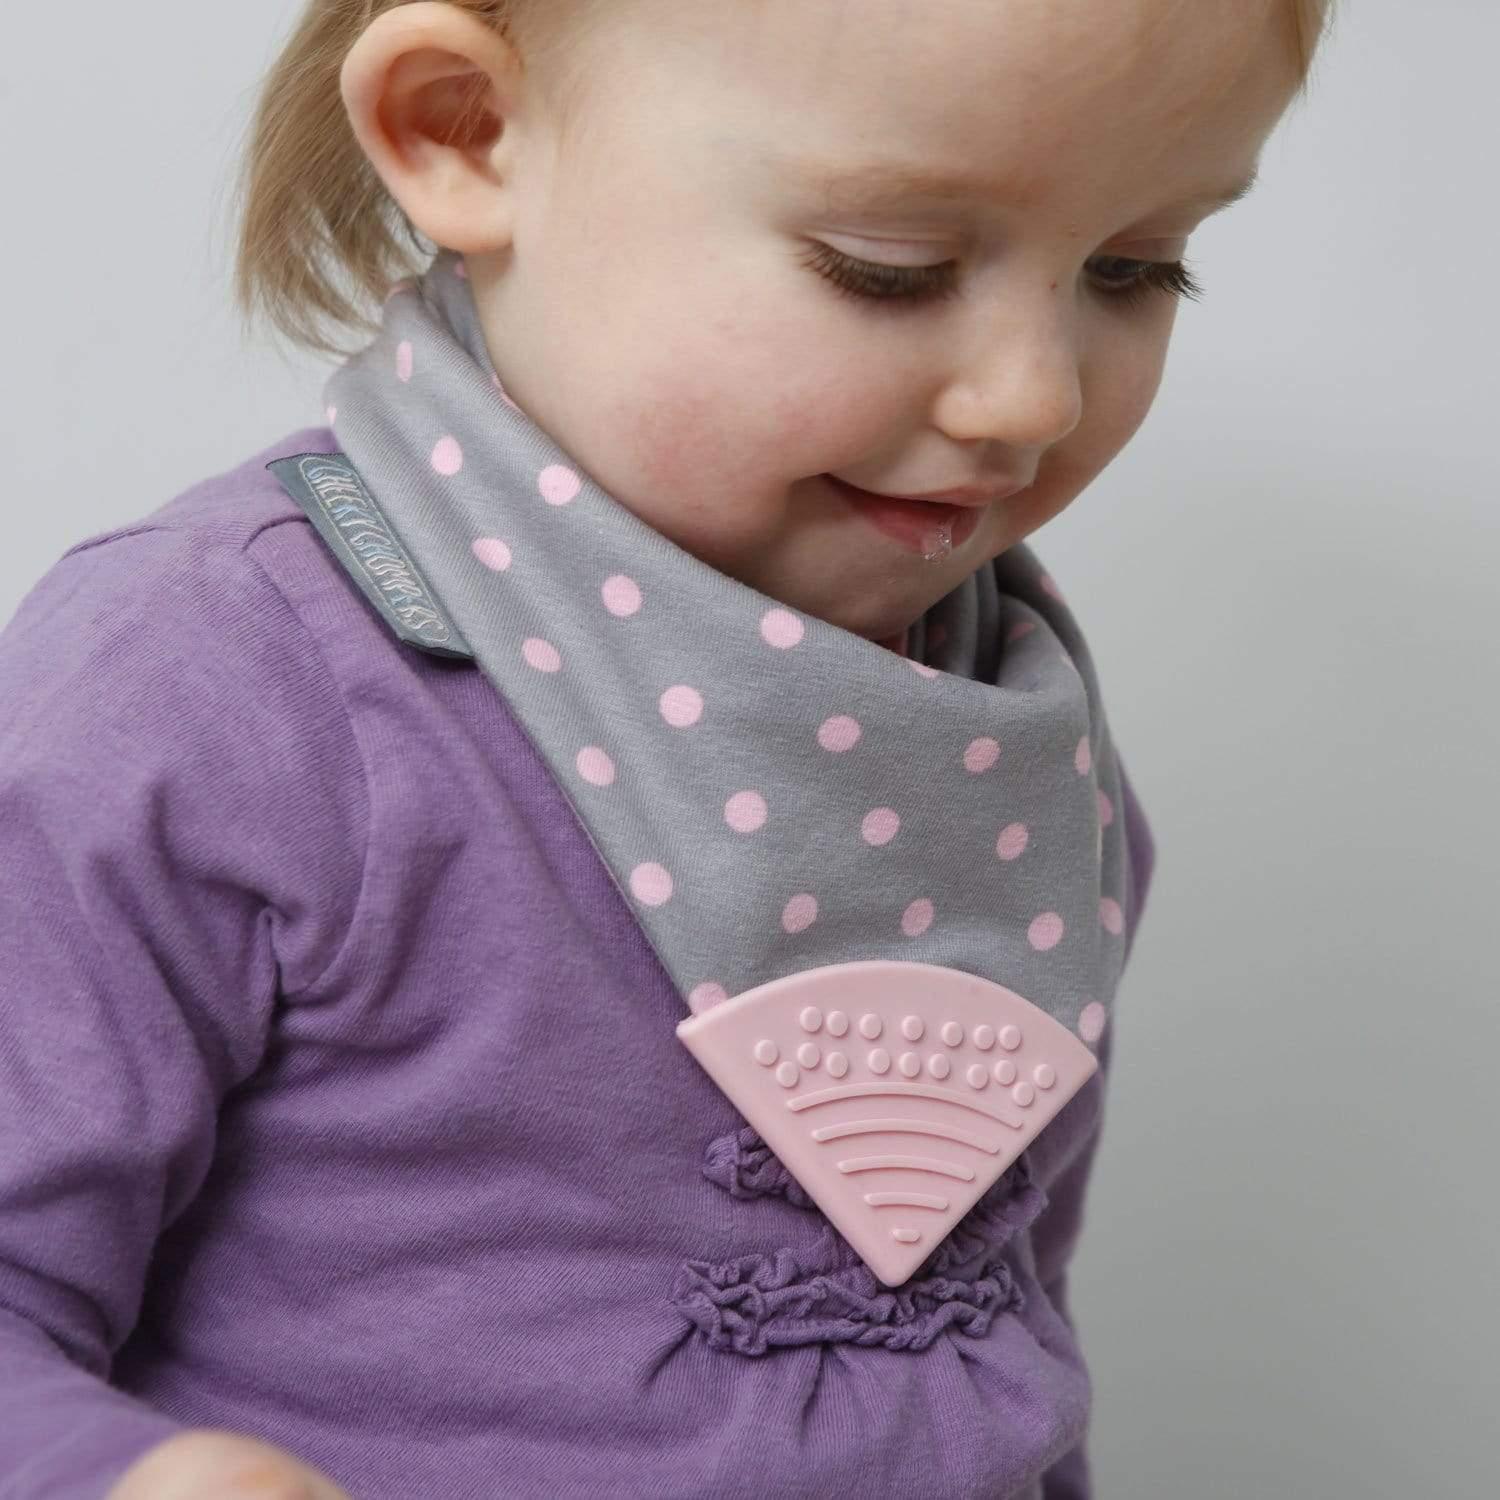 Cheeky Chompers Teething Toy Polka Dot Pink Neckerchew (7563641225464)